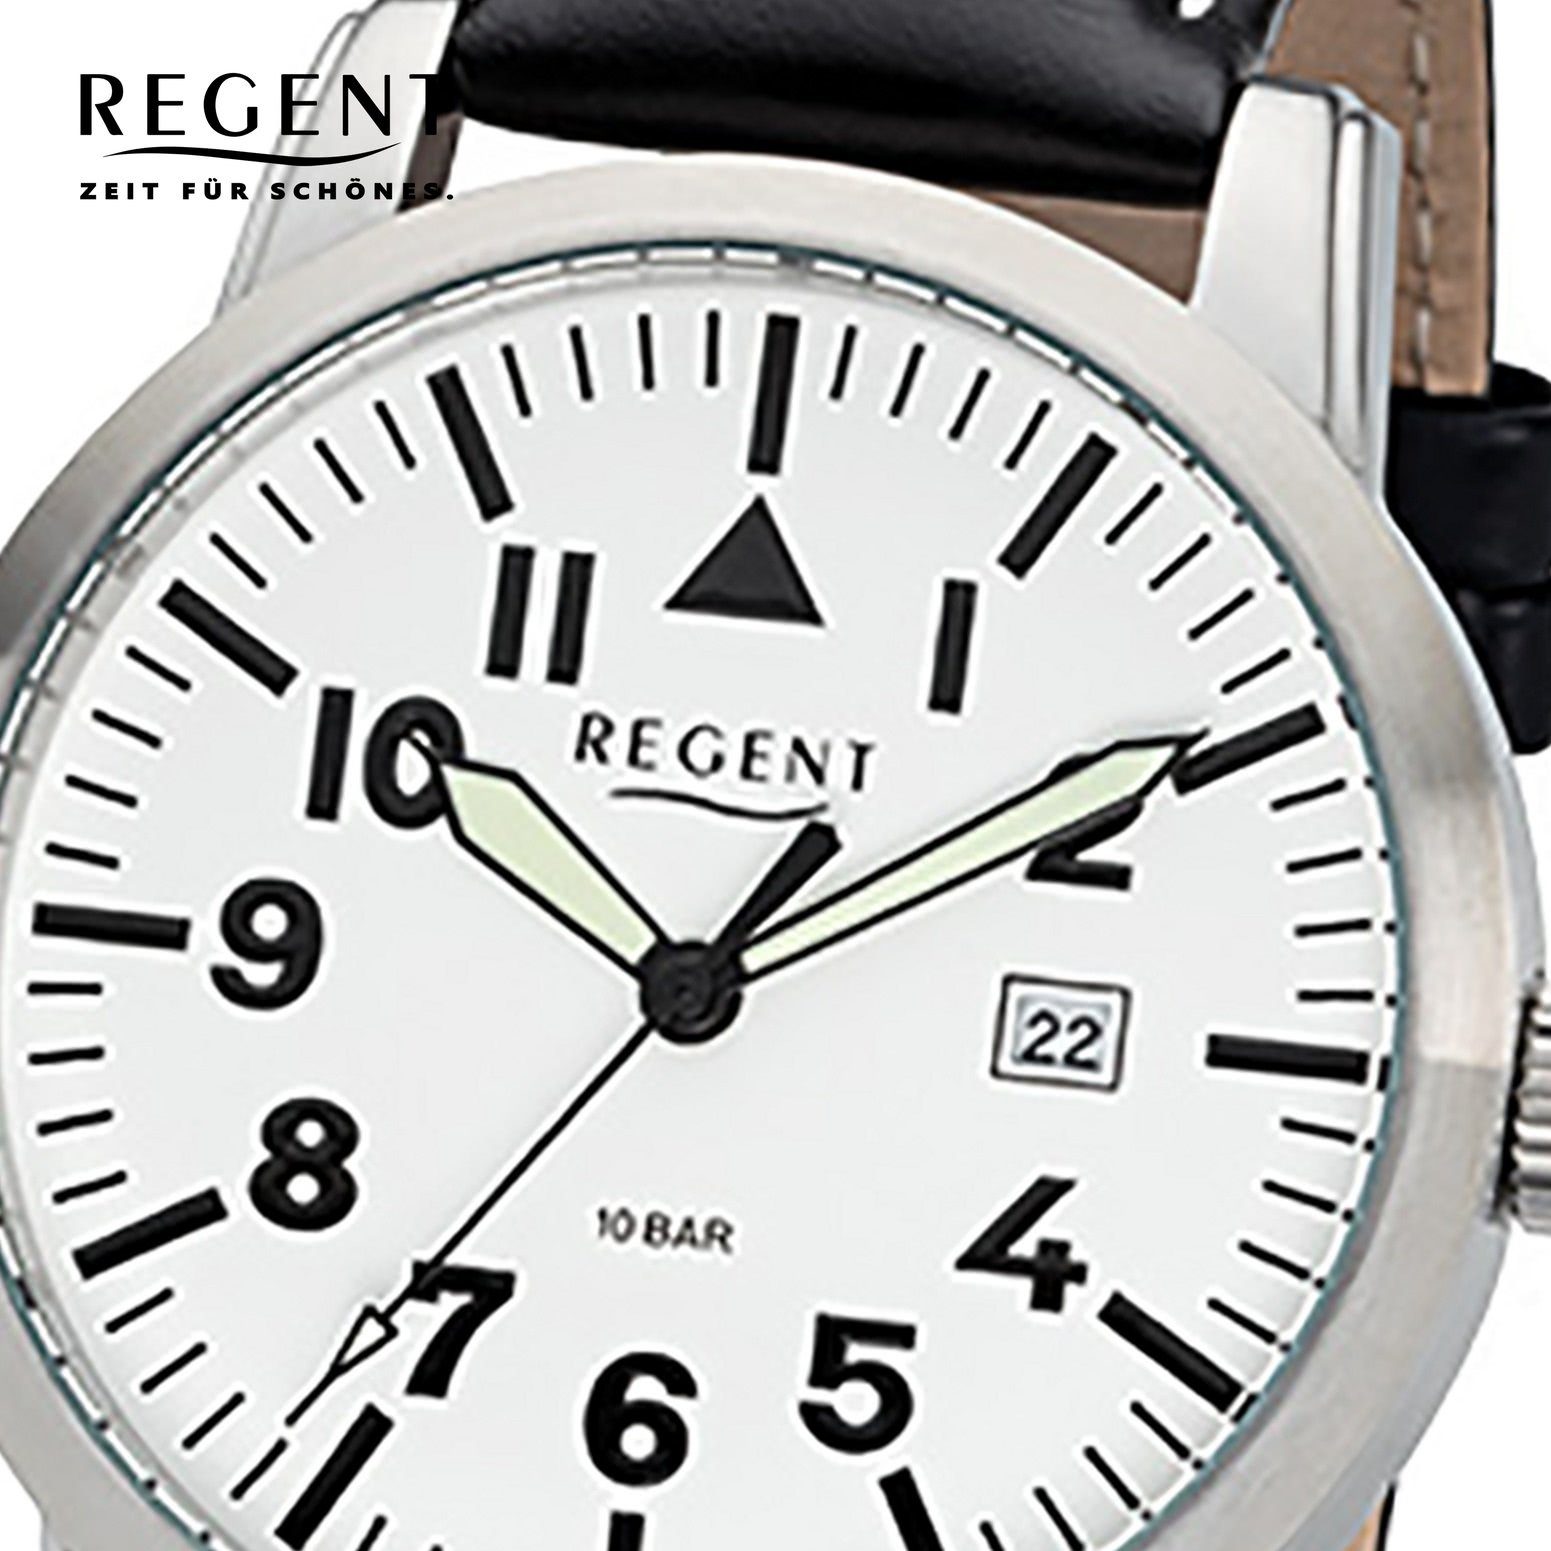 Herren 41mm), Regent Quarzuhr Herren-Armbanduhr Armbanduhr schwarz Lederarmband groß Regent rund, (ca. Analog,